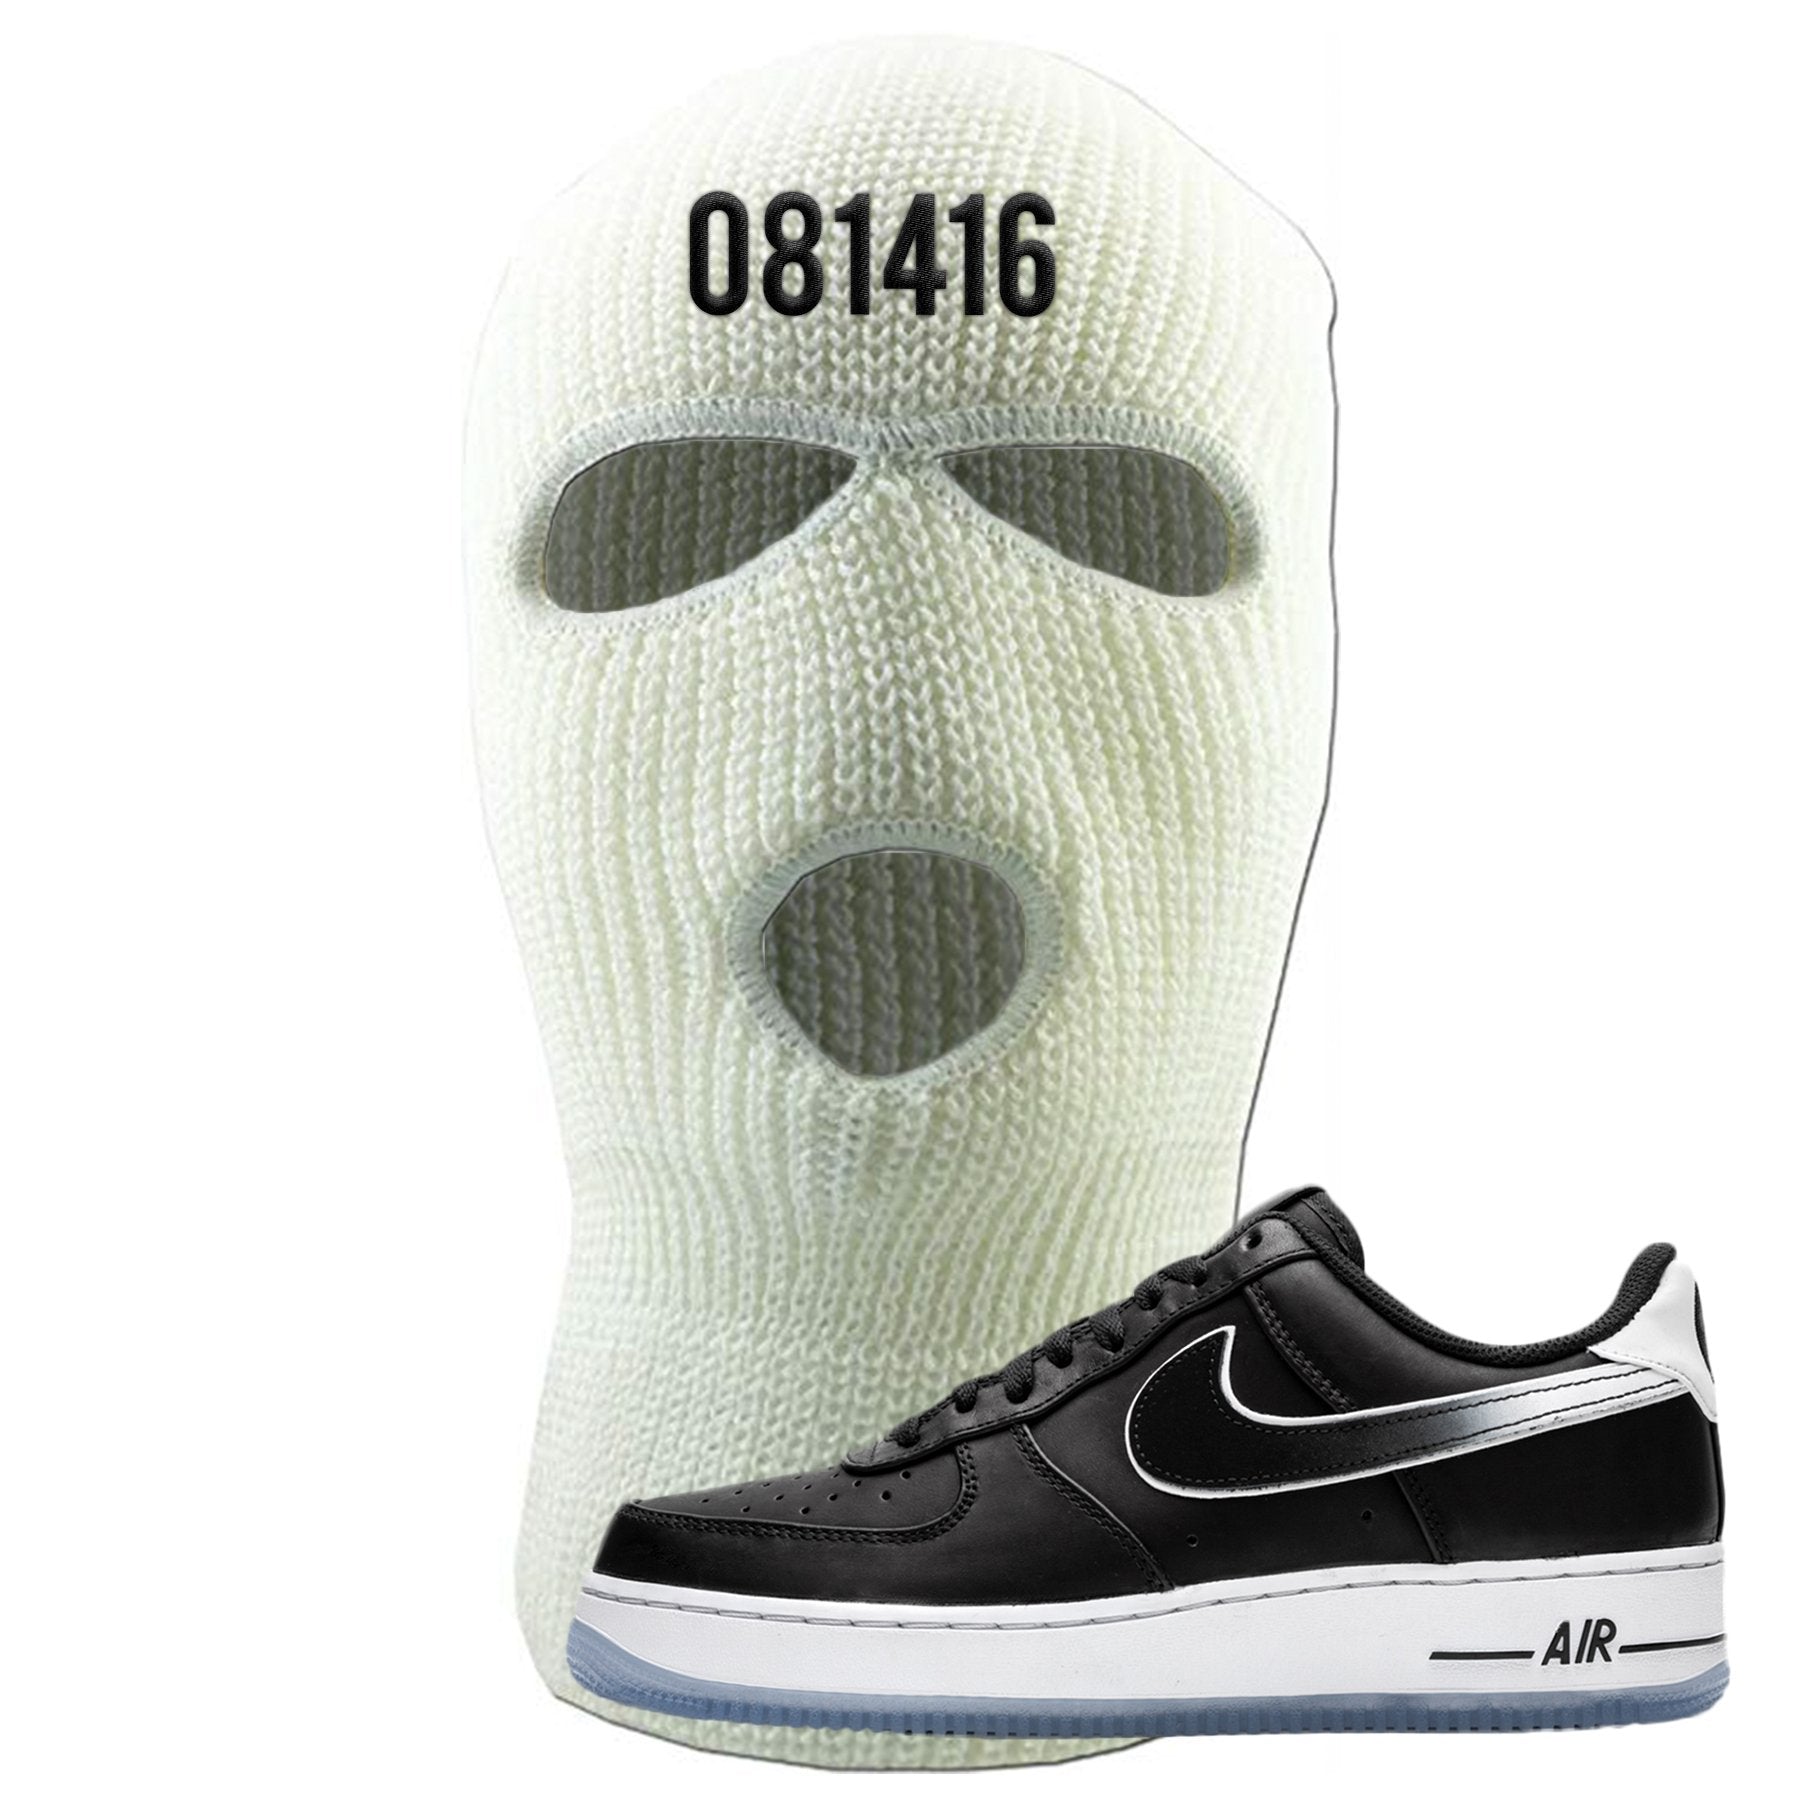 Colin Kaepernick X Air Force 1 Low 081416 White Sneaker Hook Up Ski Mask